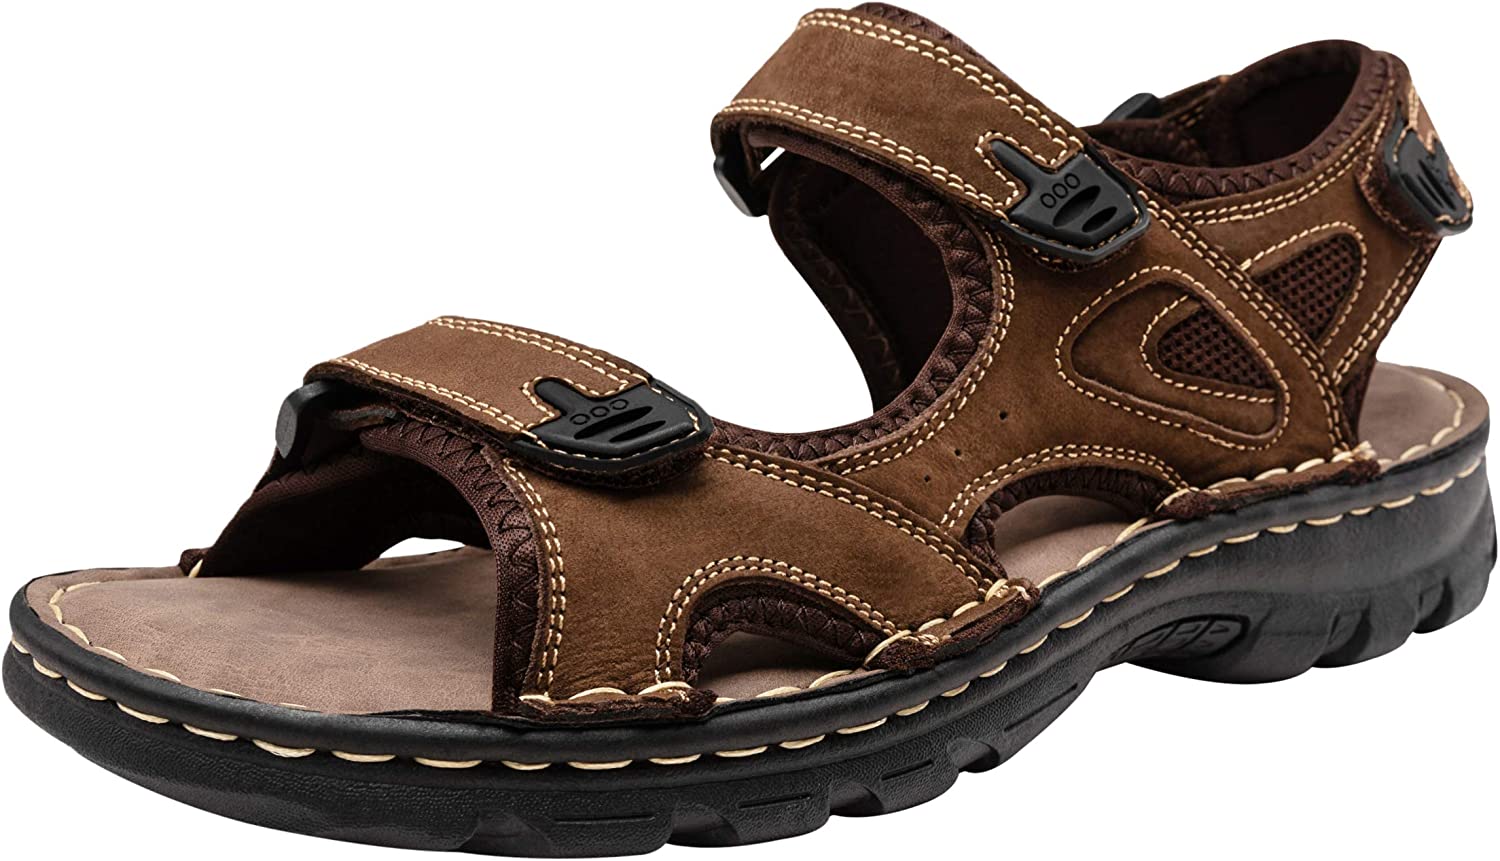 JOUSEN Men's Sandals Leather Open Toe Beach Sandal Outdoor Summer Sport ...